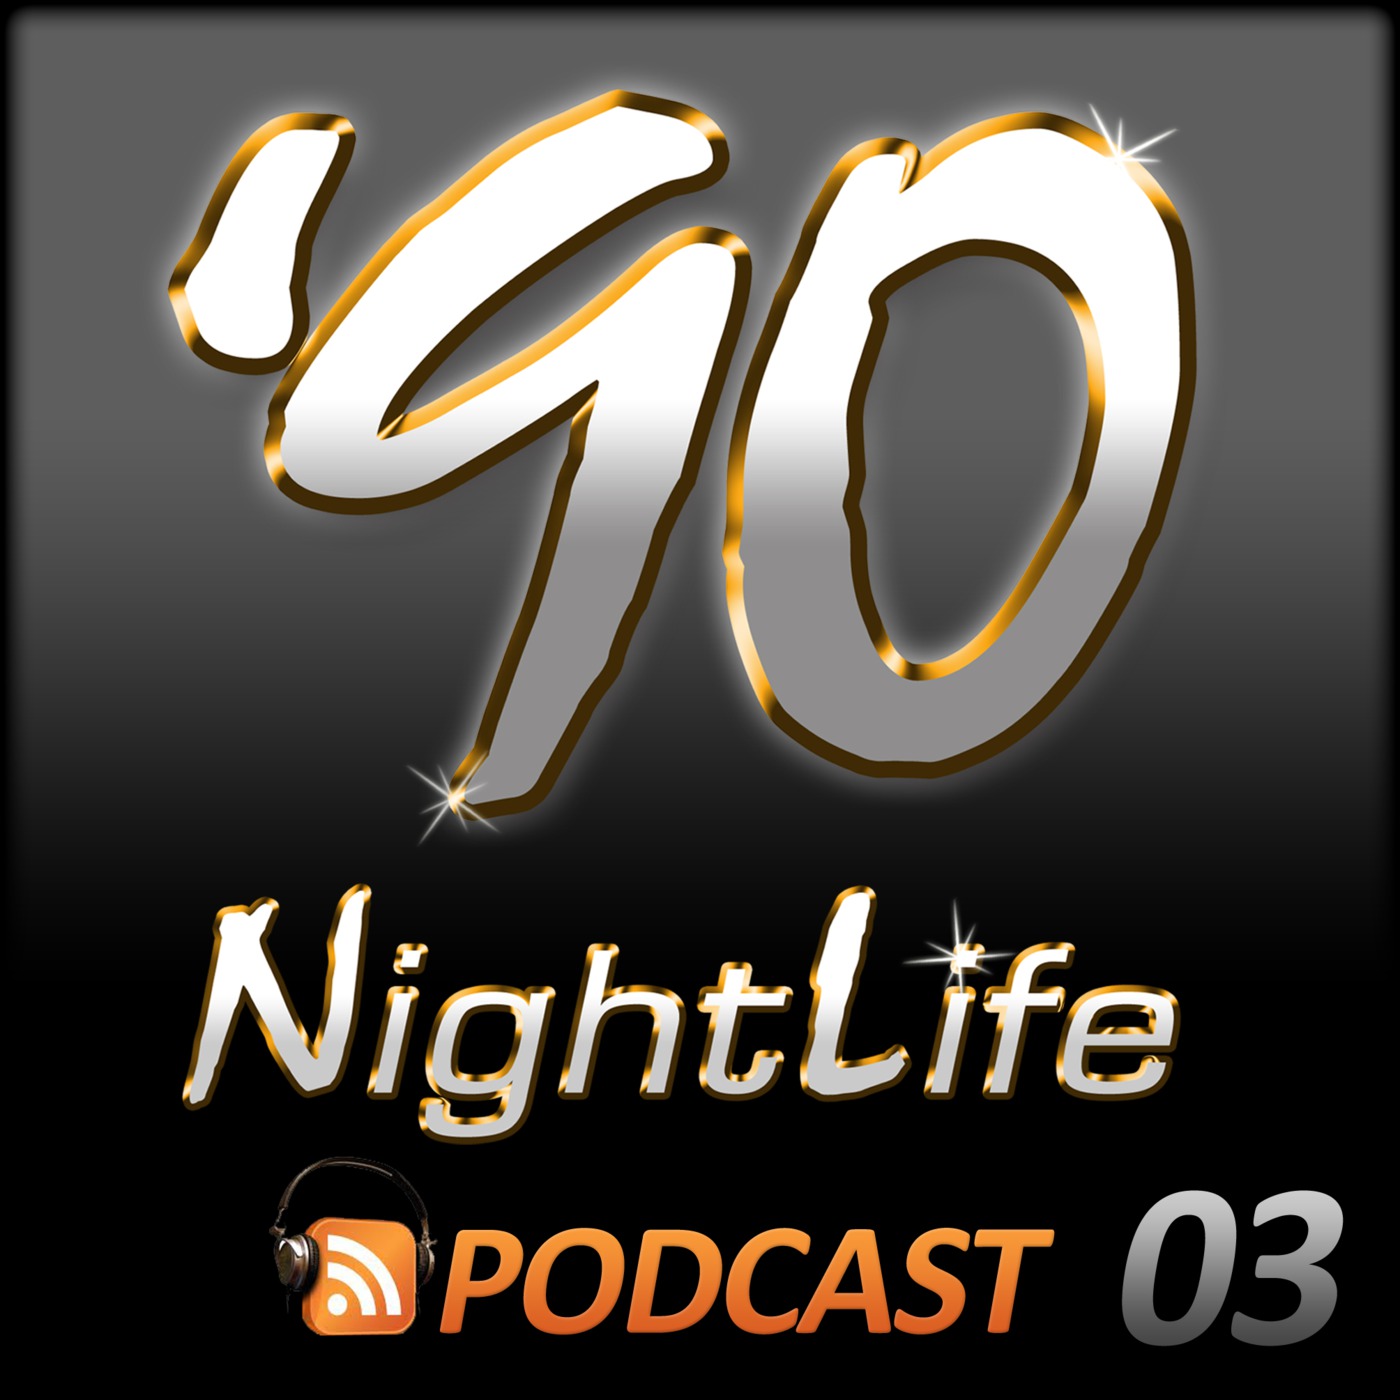 '90 NightLife - Podcast 03